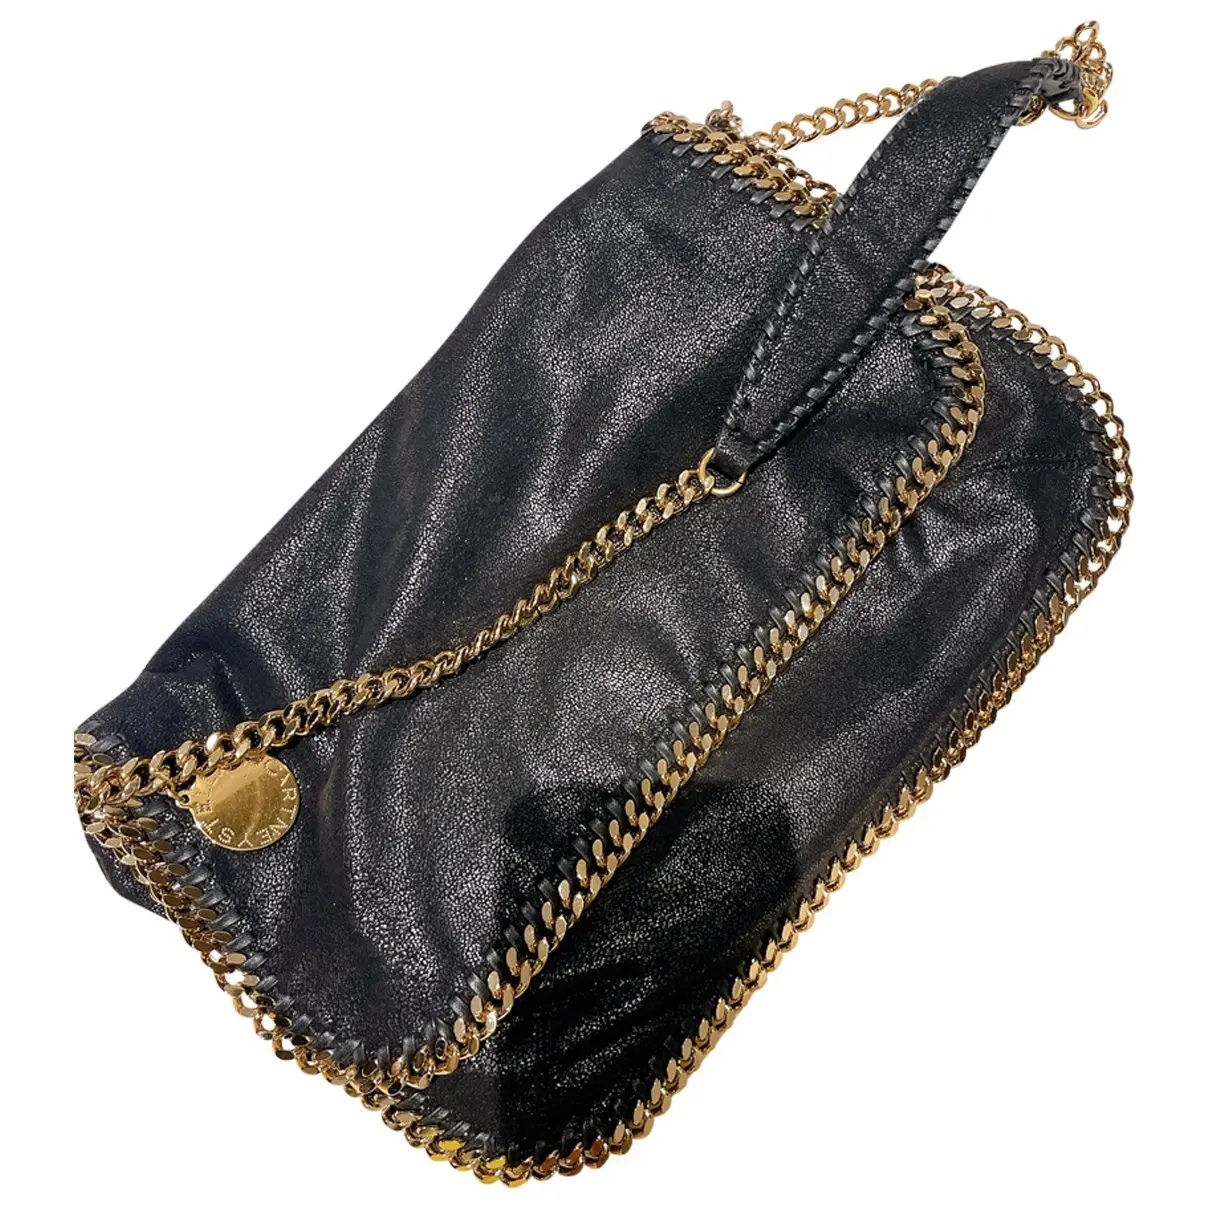 Vegan leather handbag Stella McCartney